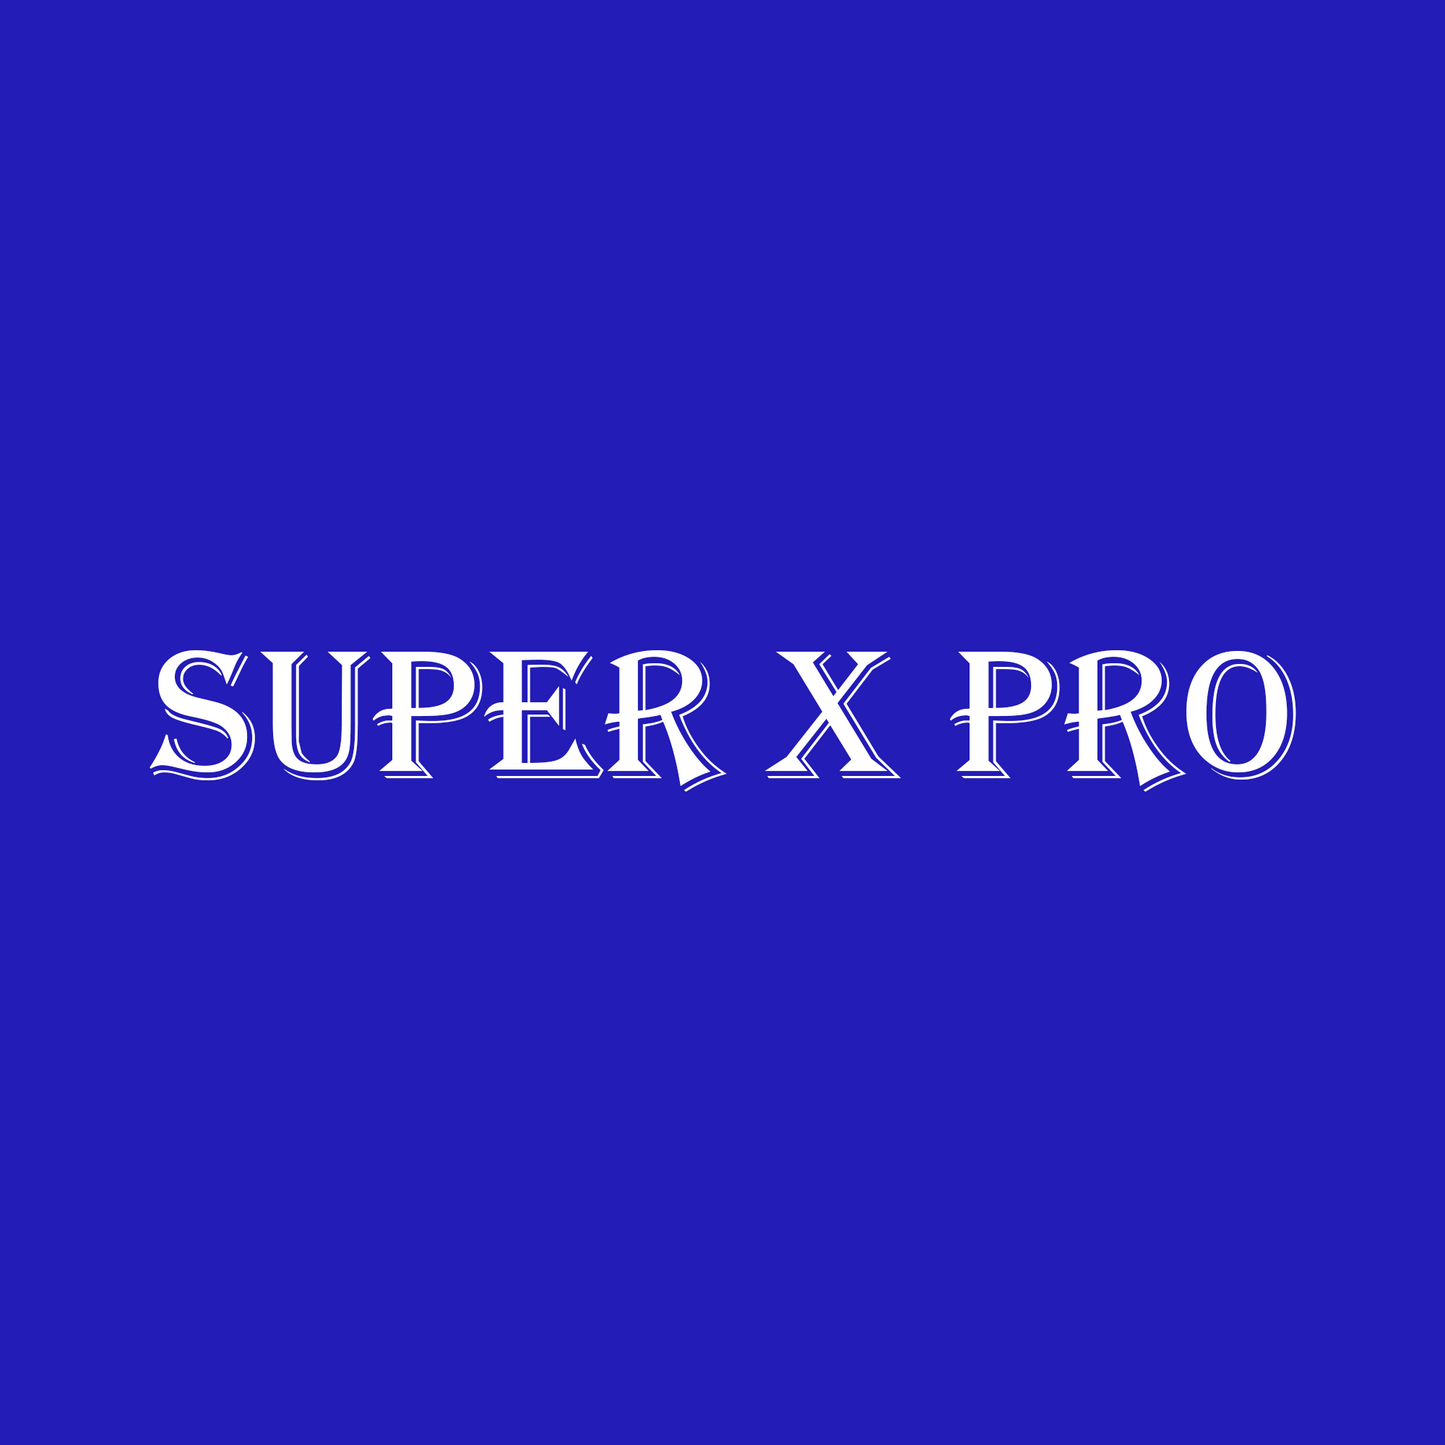 SUPER X-PRO